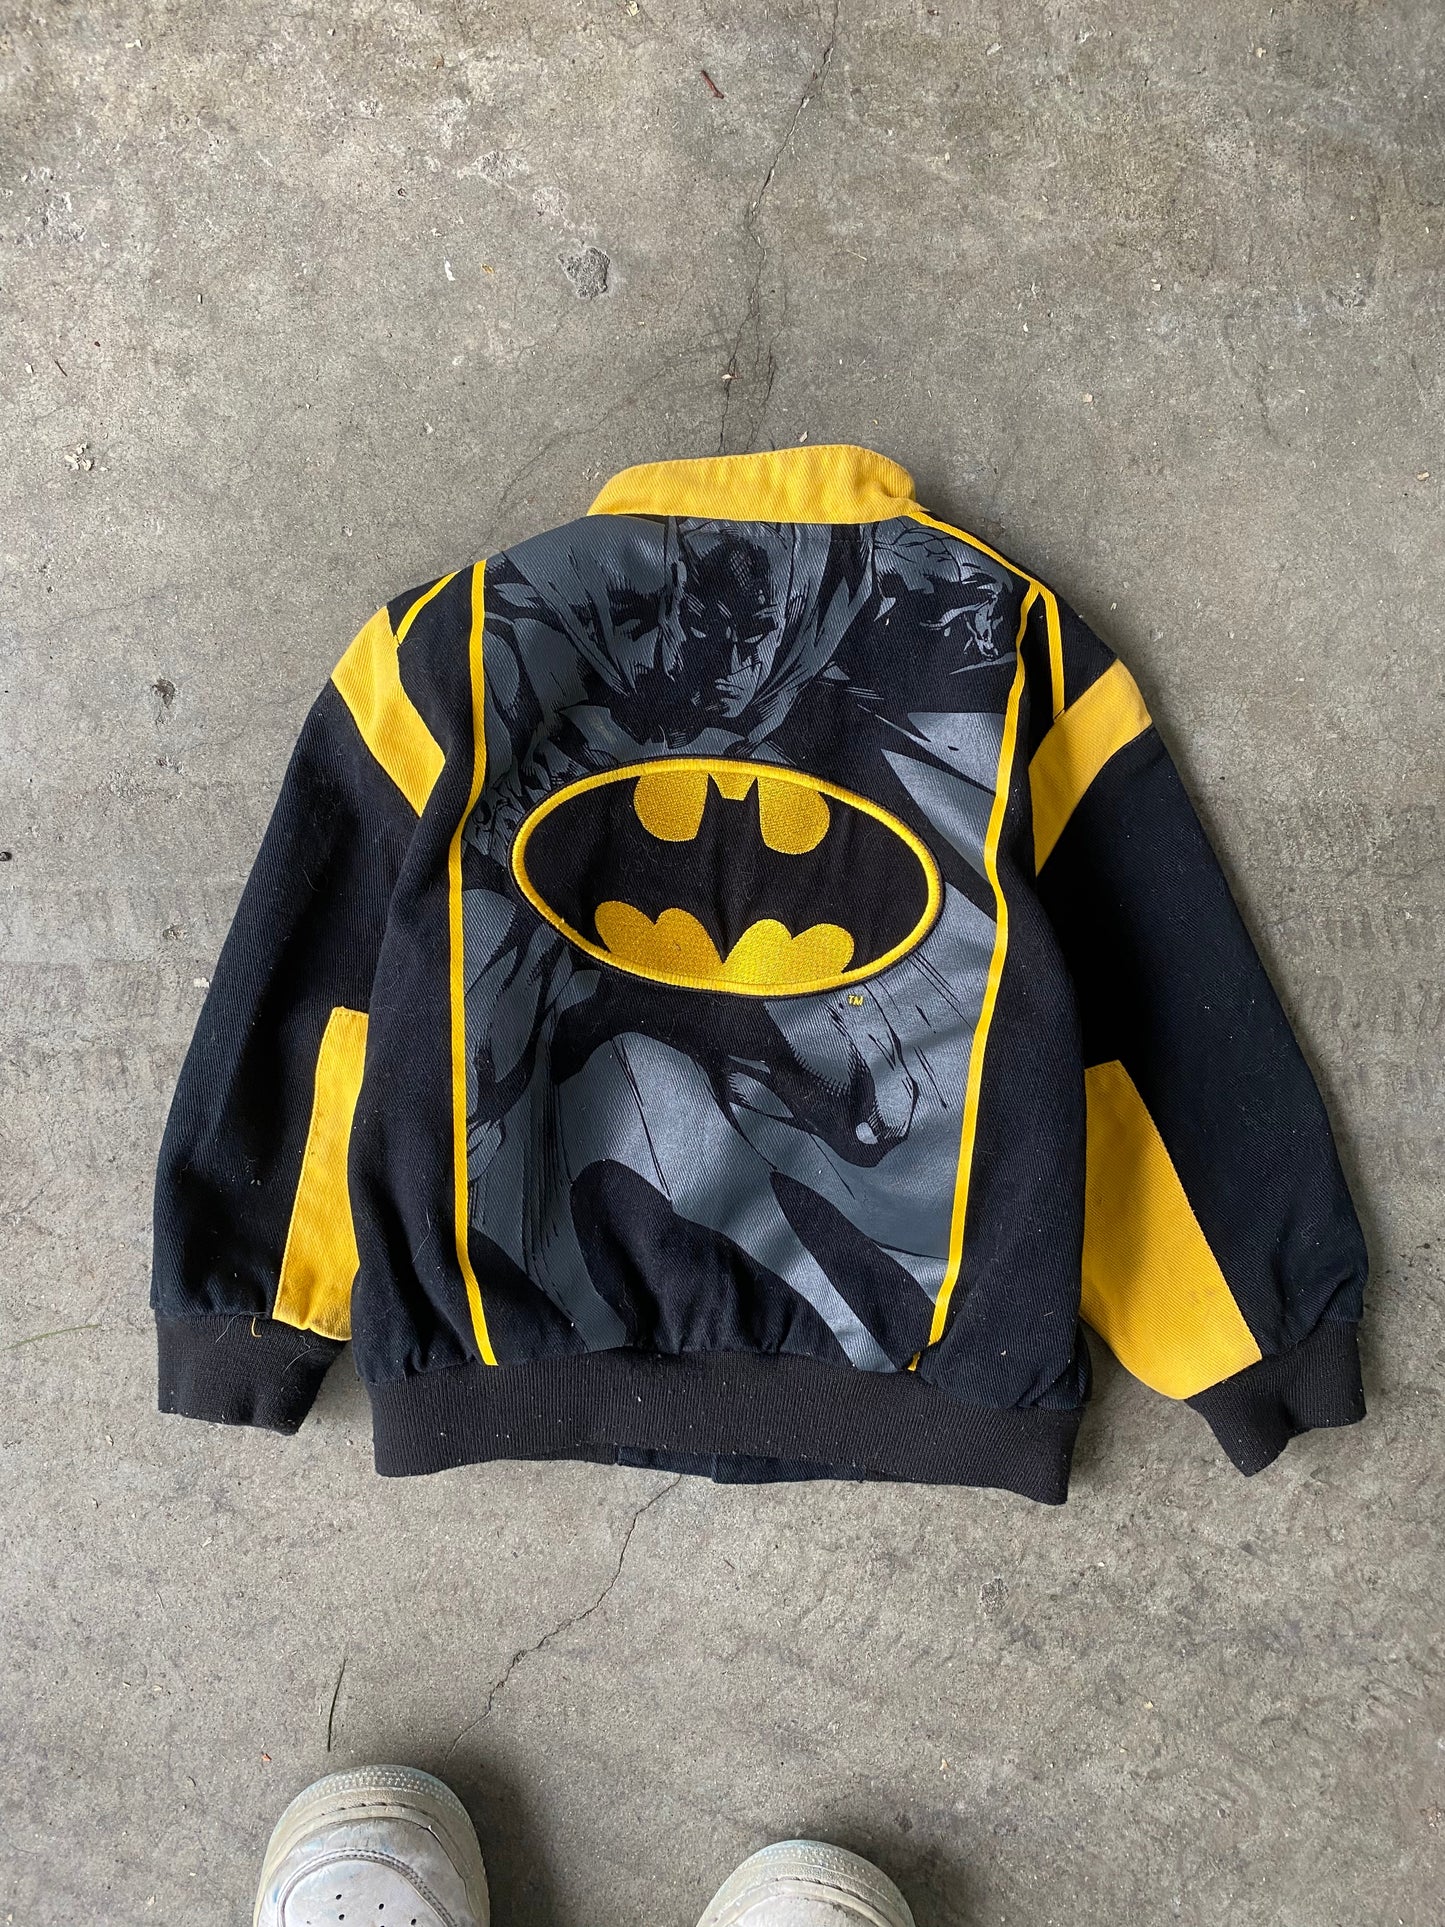 ~ (Kids Size 5) Jeff Hamilton Batman Racing Jacket